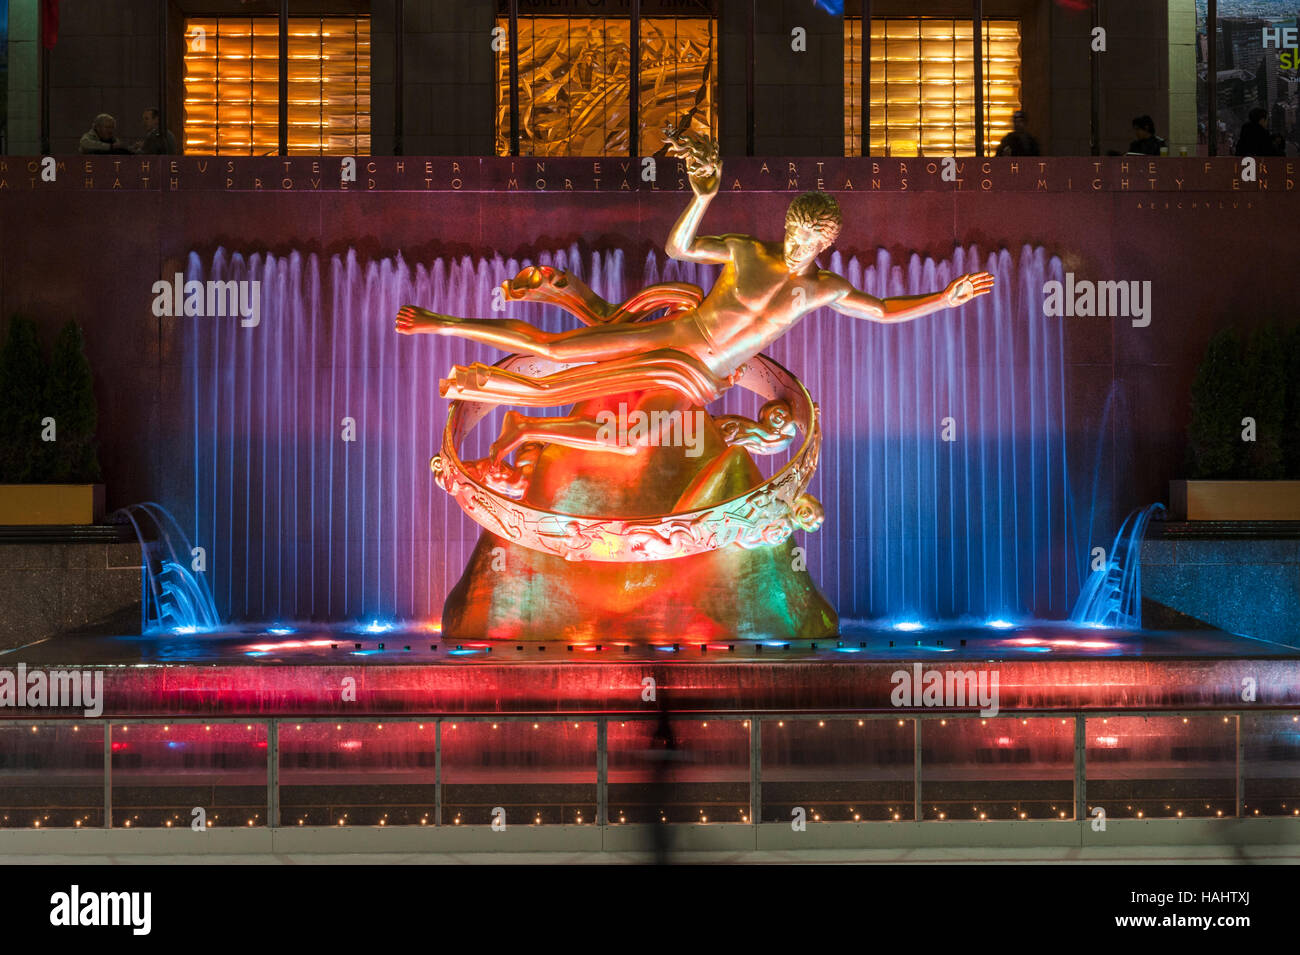 Manhattan, Rockefeller Center, New York City, NY, USA - Prometheus Sculpture by Paul Mansing and fountain illuminated at night. Stock Photo